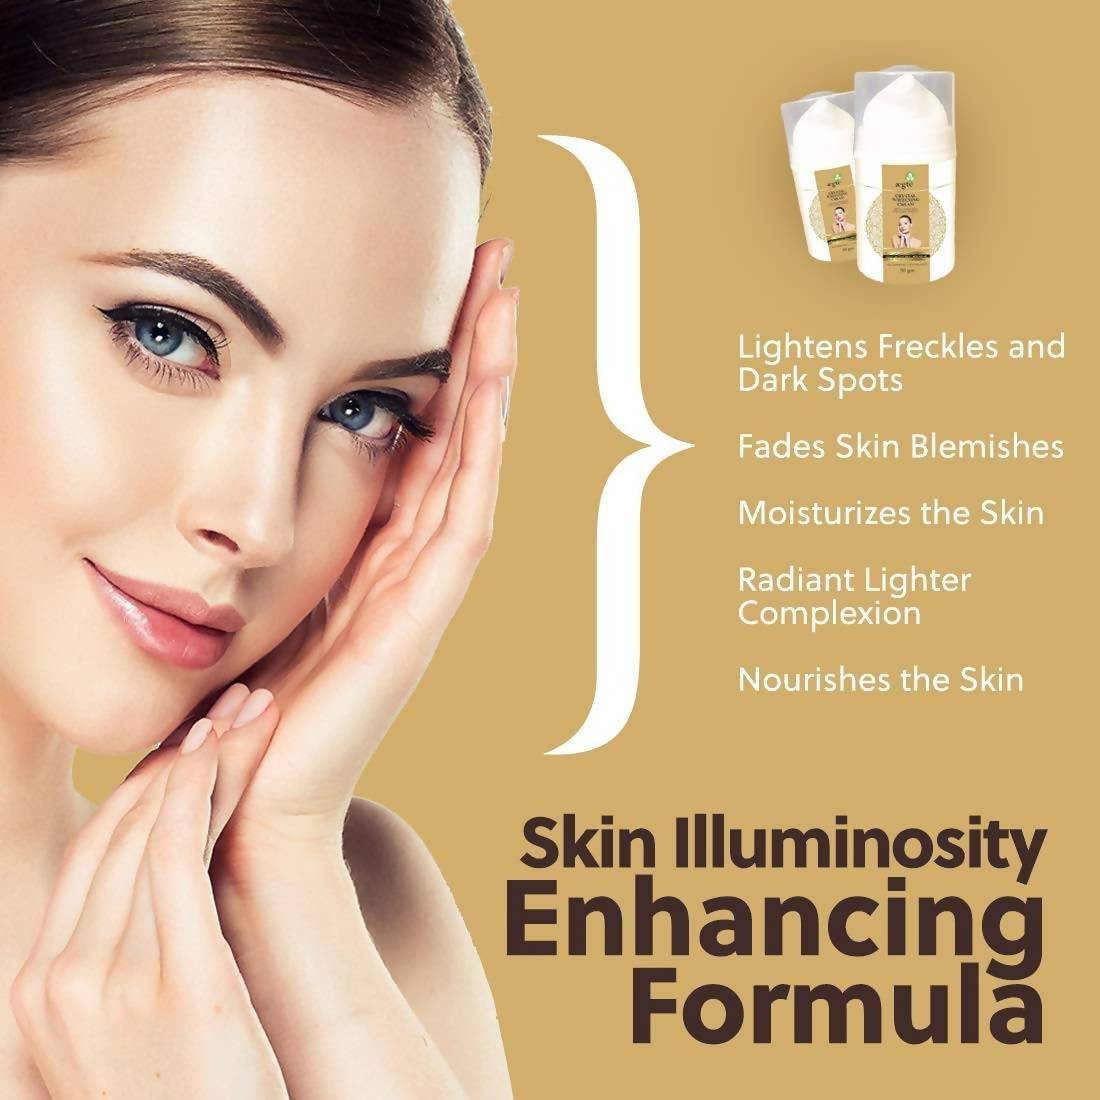 Aegte Crystal Whitening Cream Skin Illuminosity Enhancing Formula uses